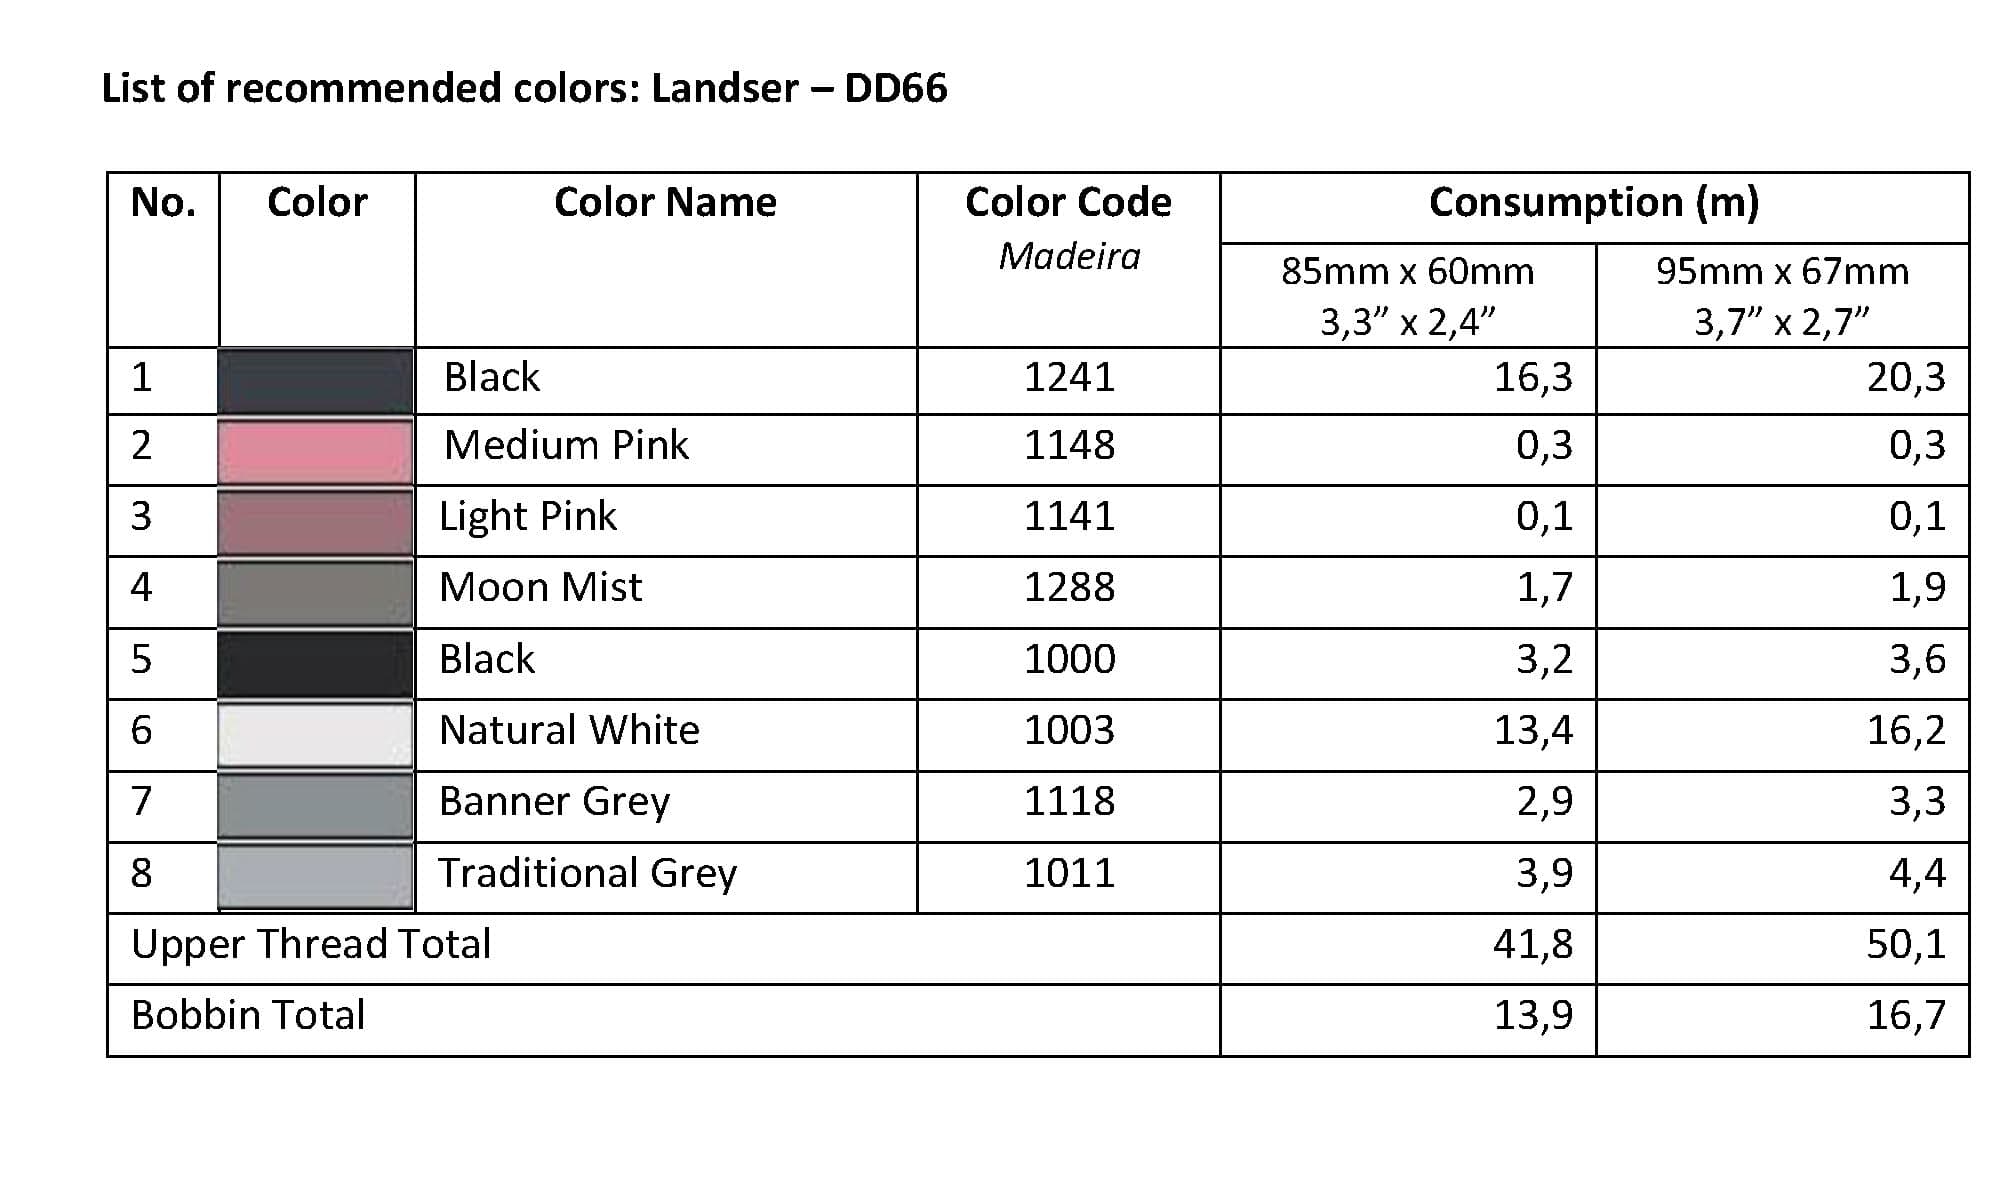 List of Recommended Colors - Landseer DD66